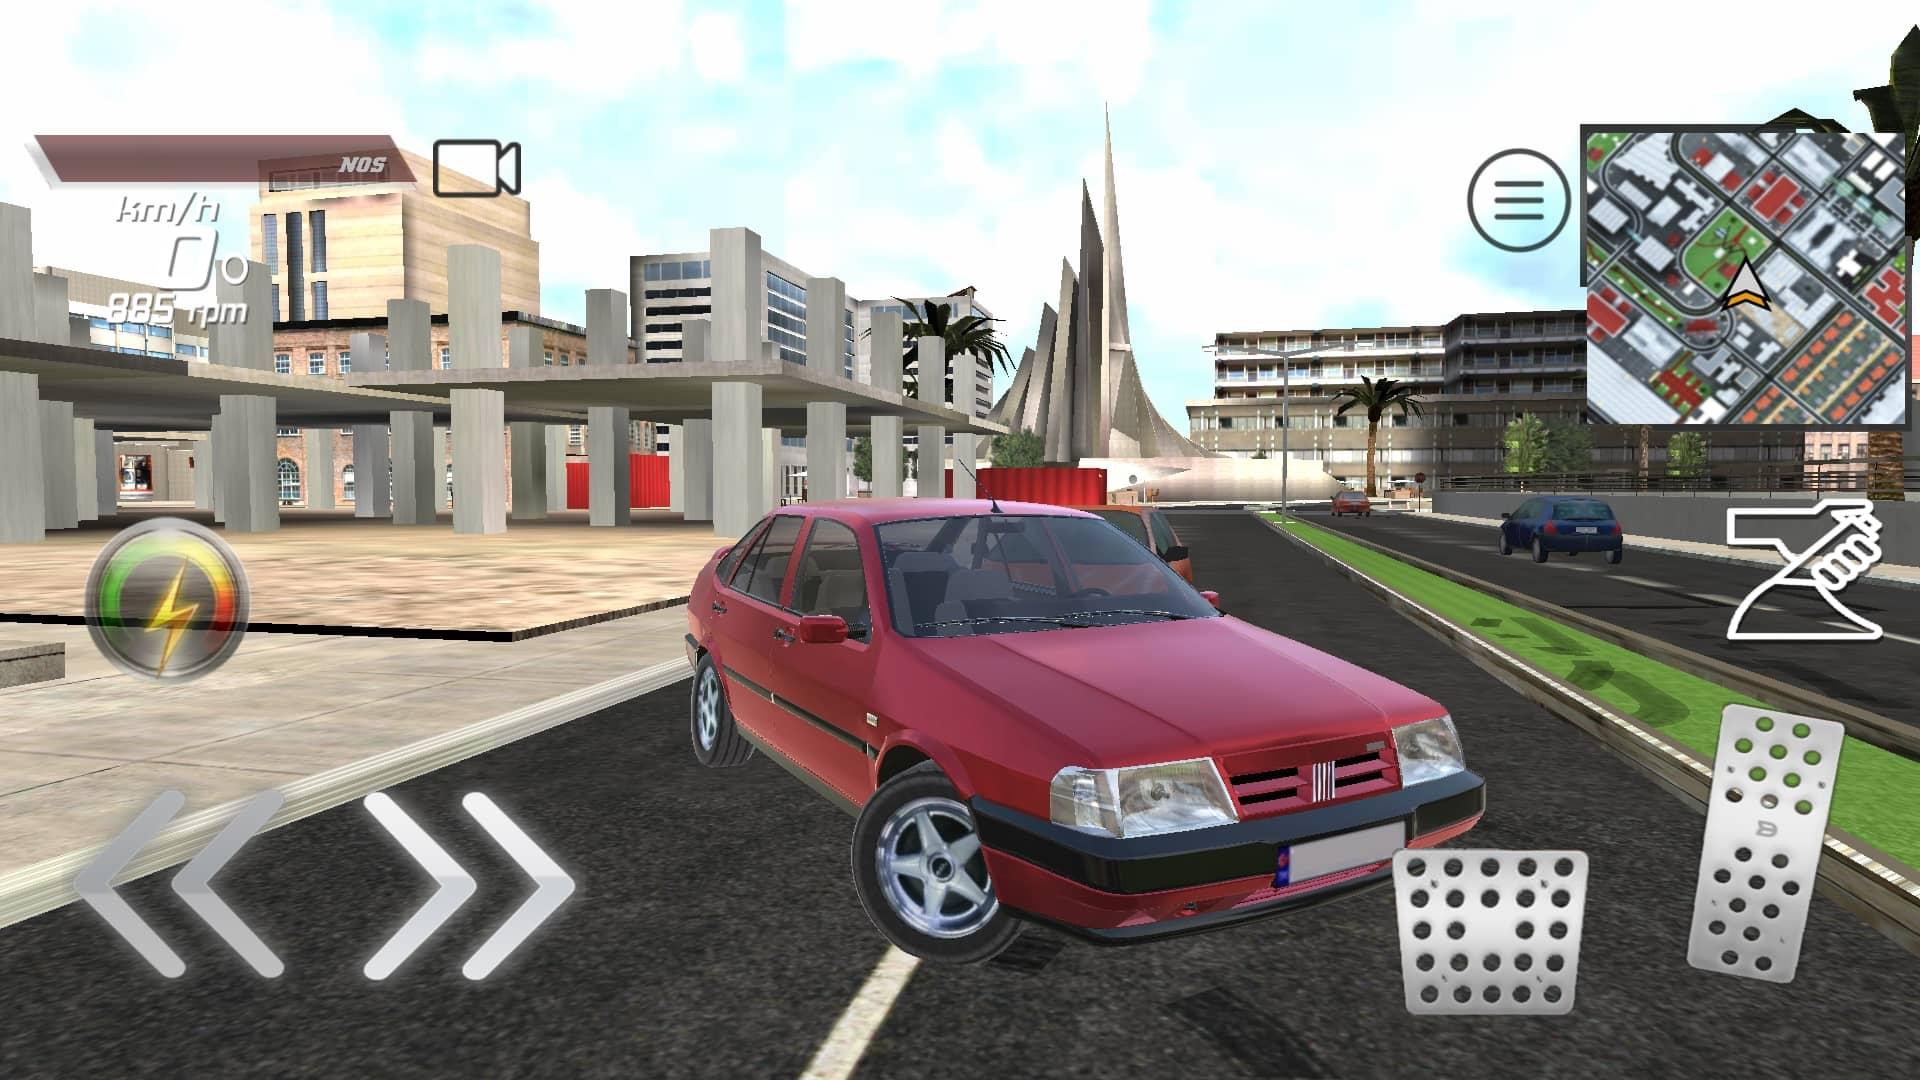 Tempra - City Simulation, Quests and Parking 1.7 Screenshot 5